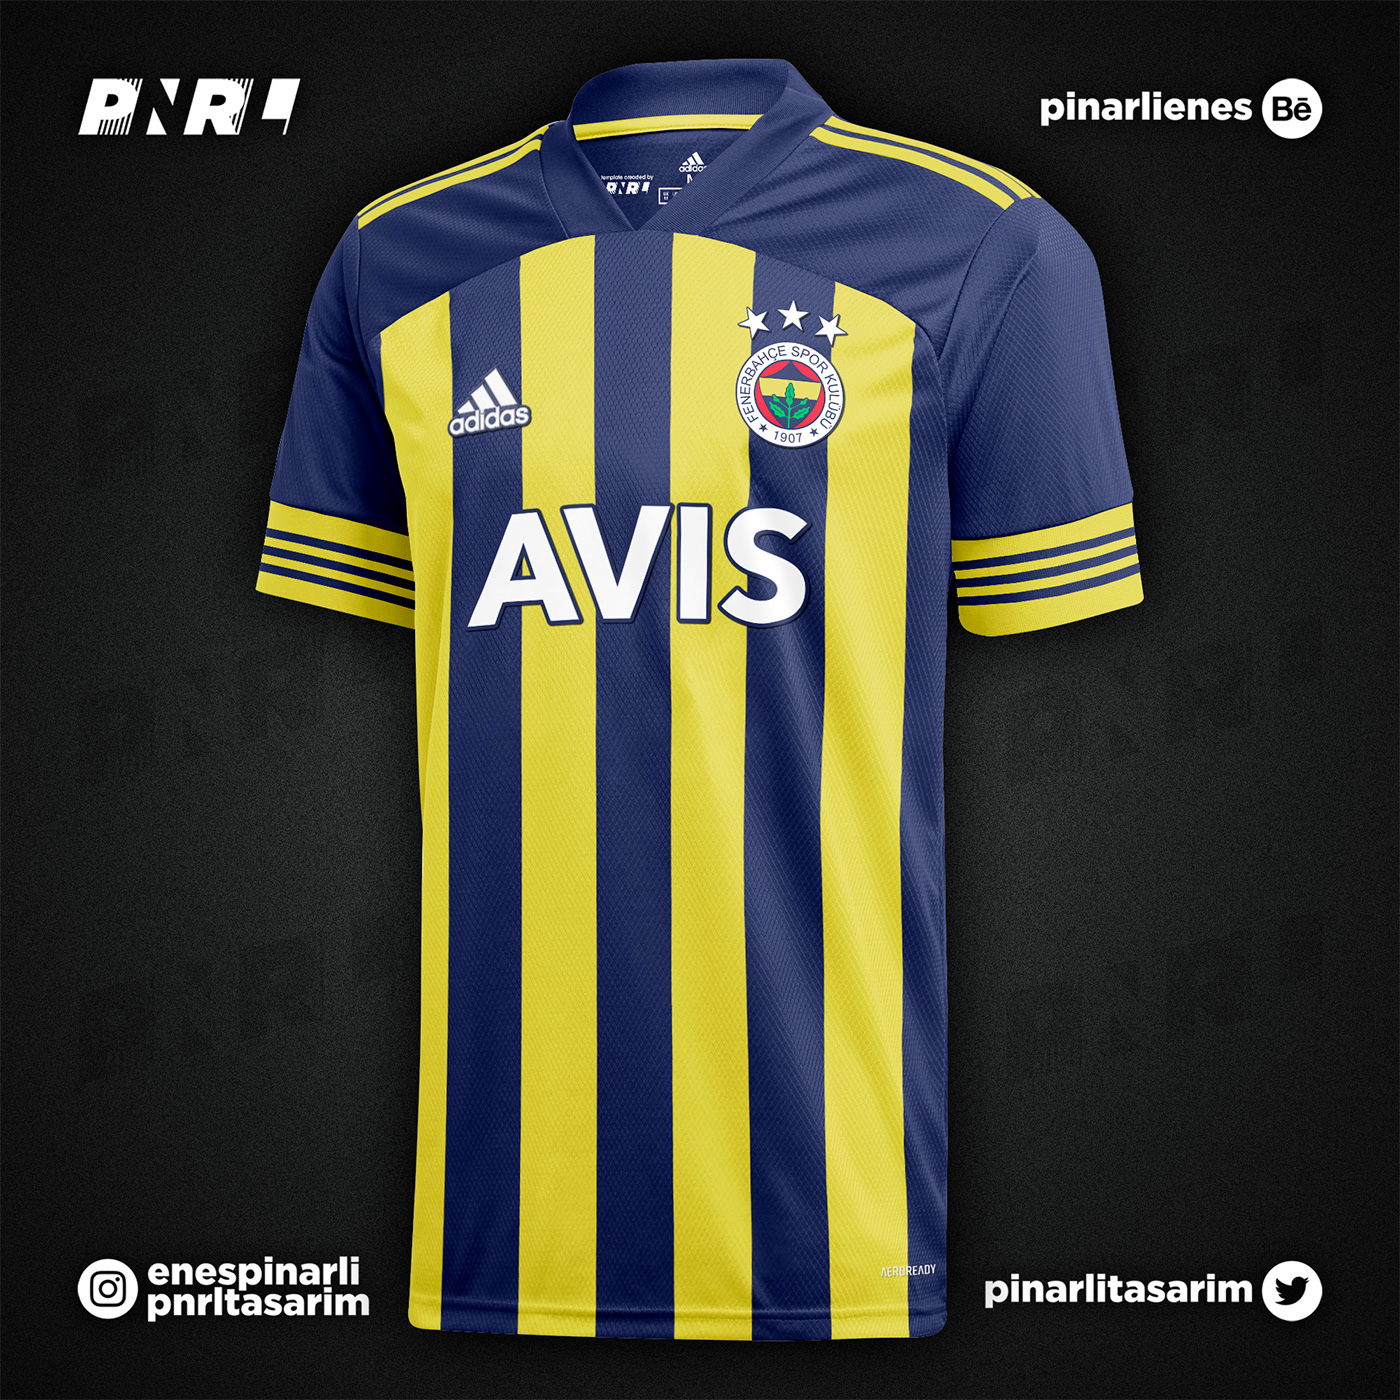 Download Adidas Soccer / Football Shirt Mockup on Behance